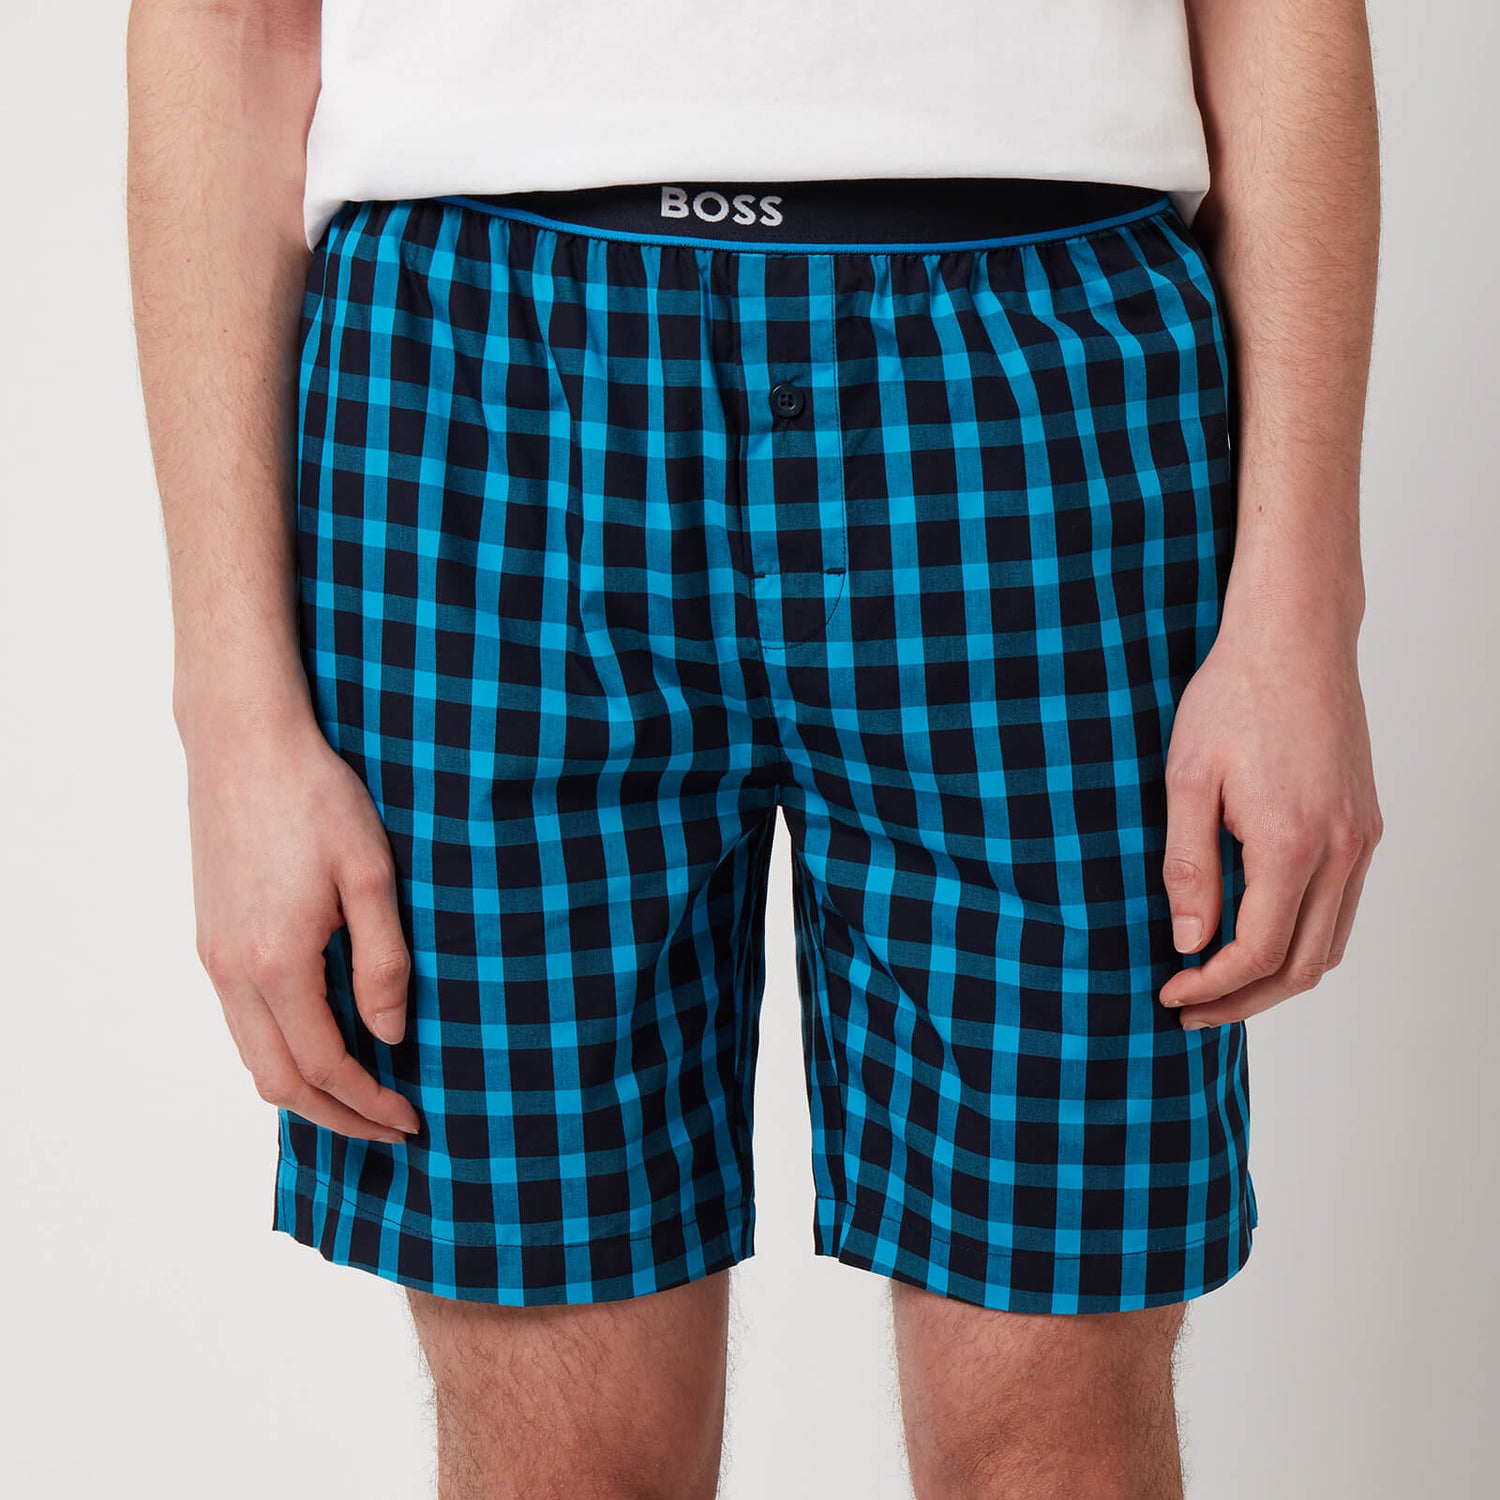 BOSS Bodywear Men's Urban Shorts - Bright Blue - L